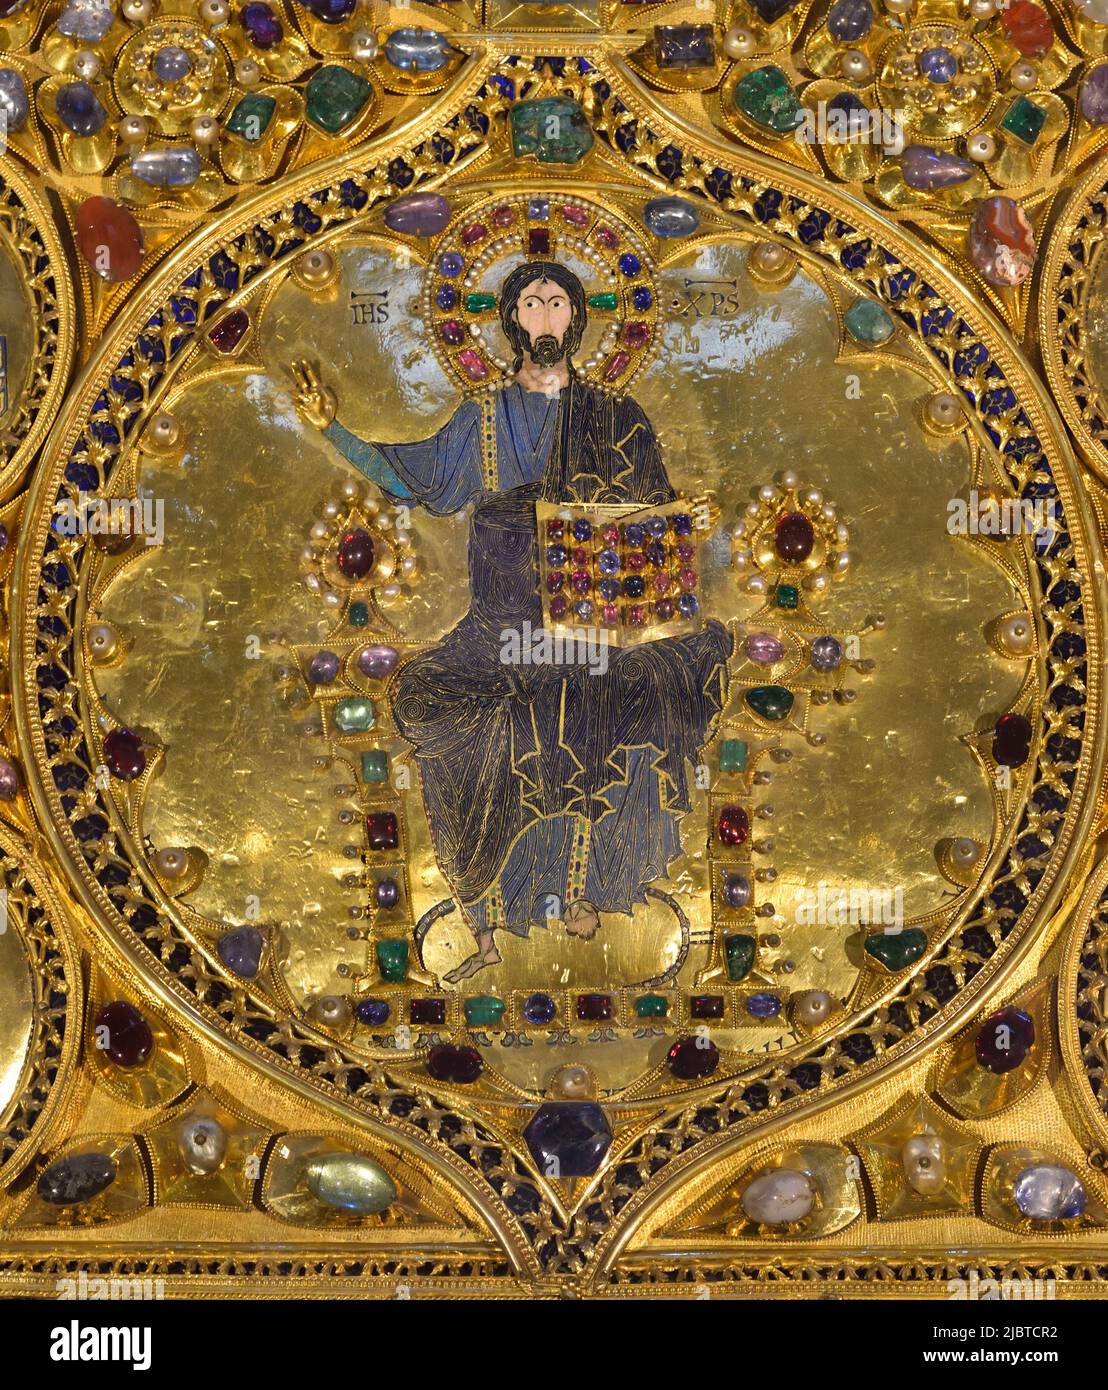 Italien, Venetien, Venedig, von der UNESCO zum Weltkulturerbe erklärt, Markusbasilika, Pala d'Oro (Altarretabel), Christ in Glory Stockfoto